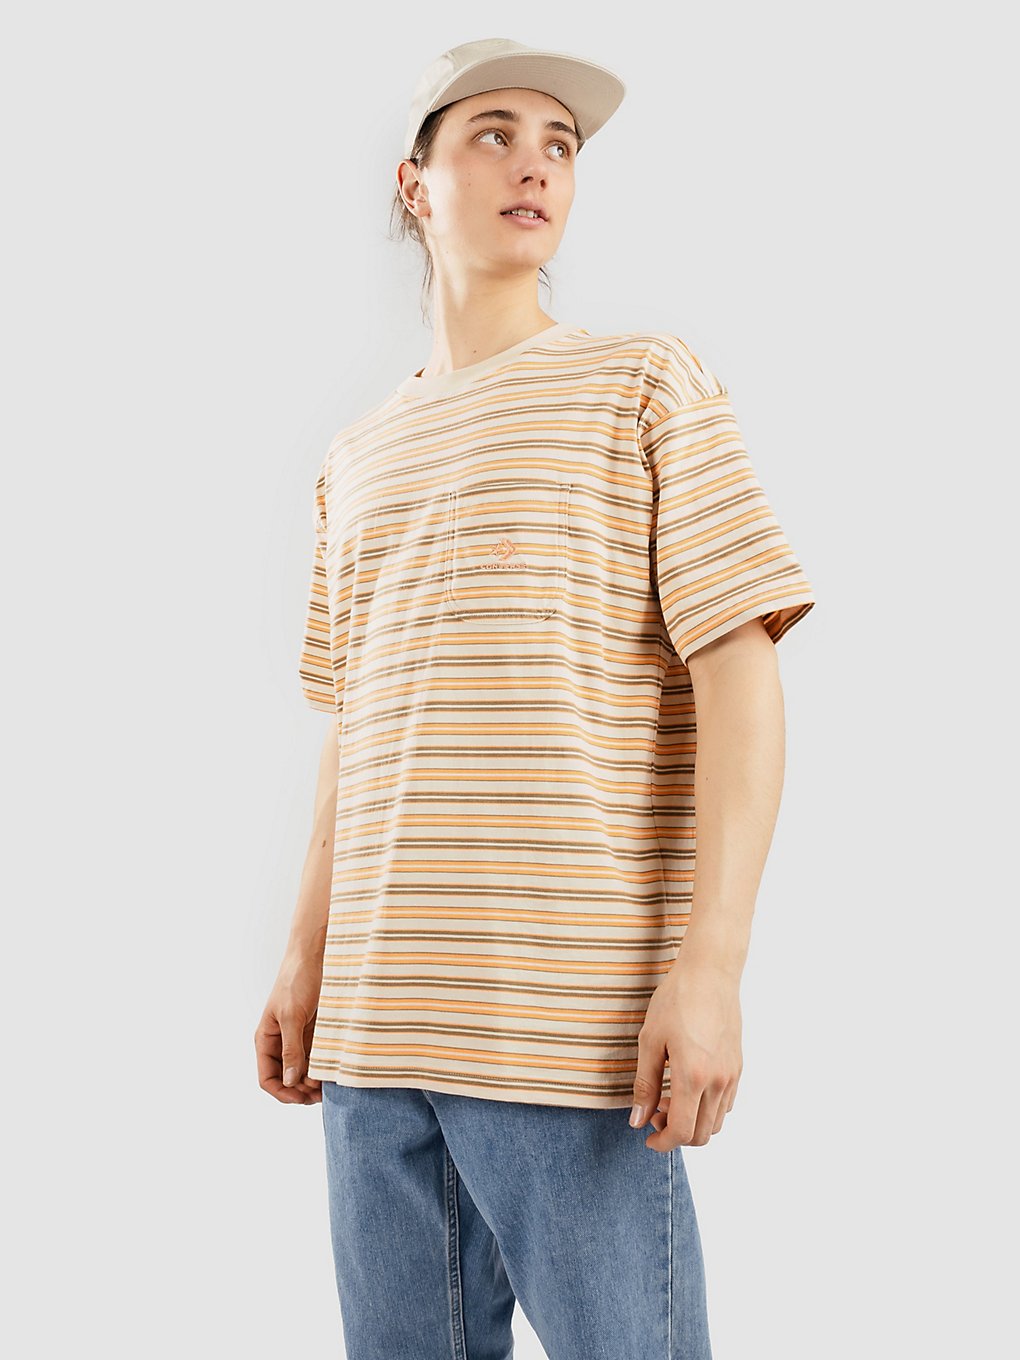 Converse Yarn Dye Striped Pocket T-Shirt natural ivory stripe